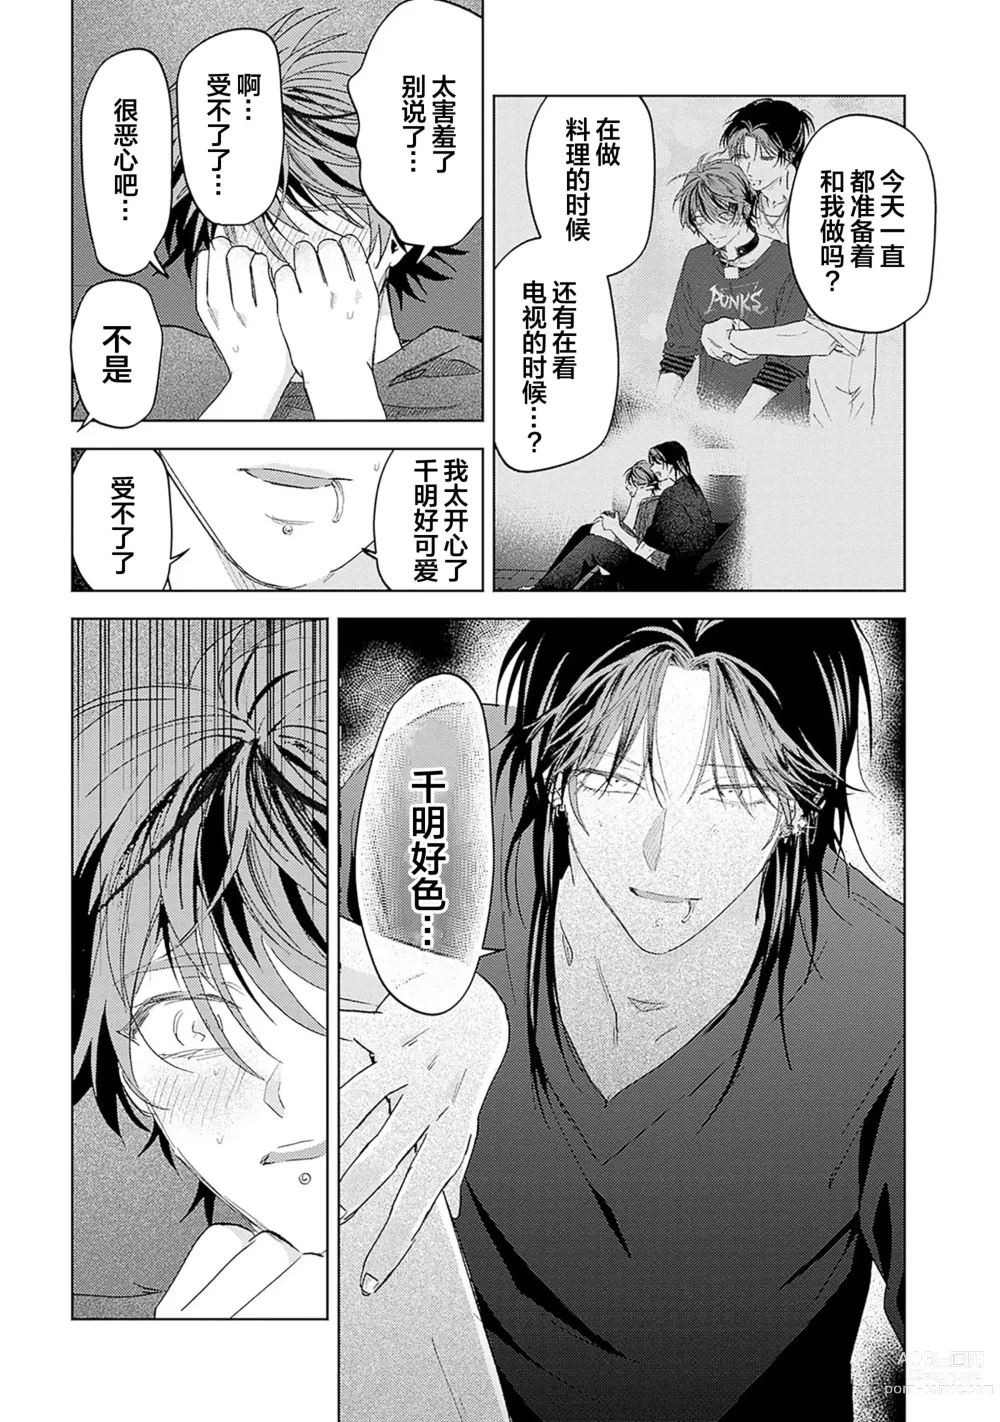 Page 252 of manga 朋克三角